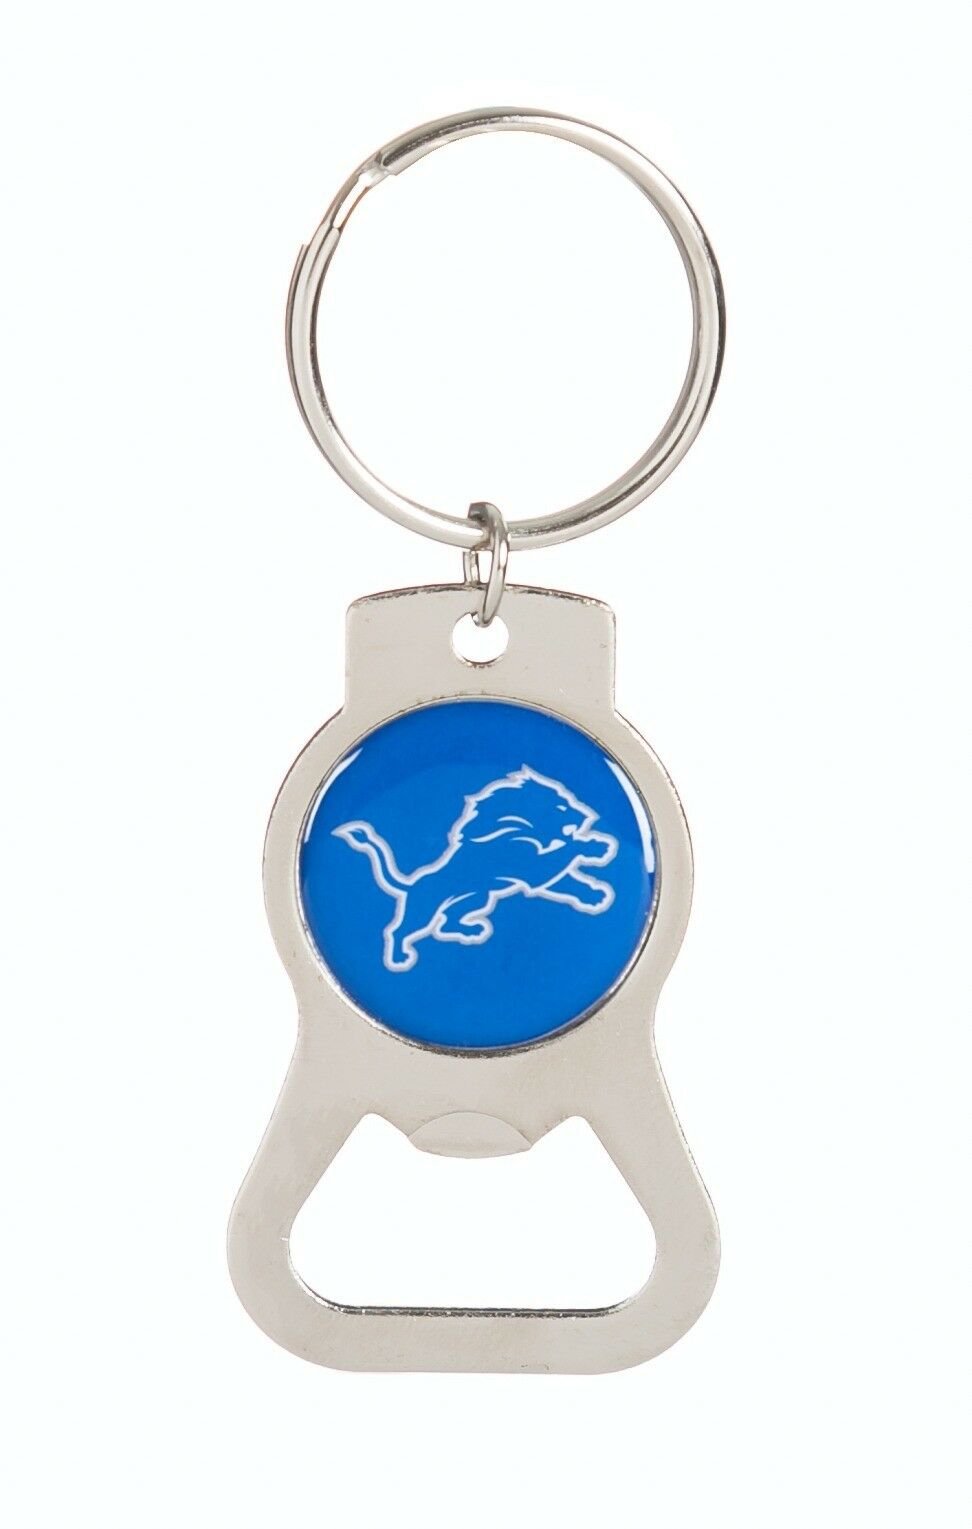 Detroit Lions Premium Solid Metal Bottle Opener Keychain, Silver Key Ring, Team Logo